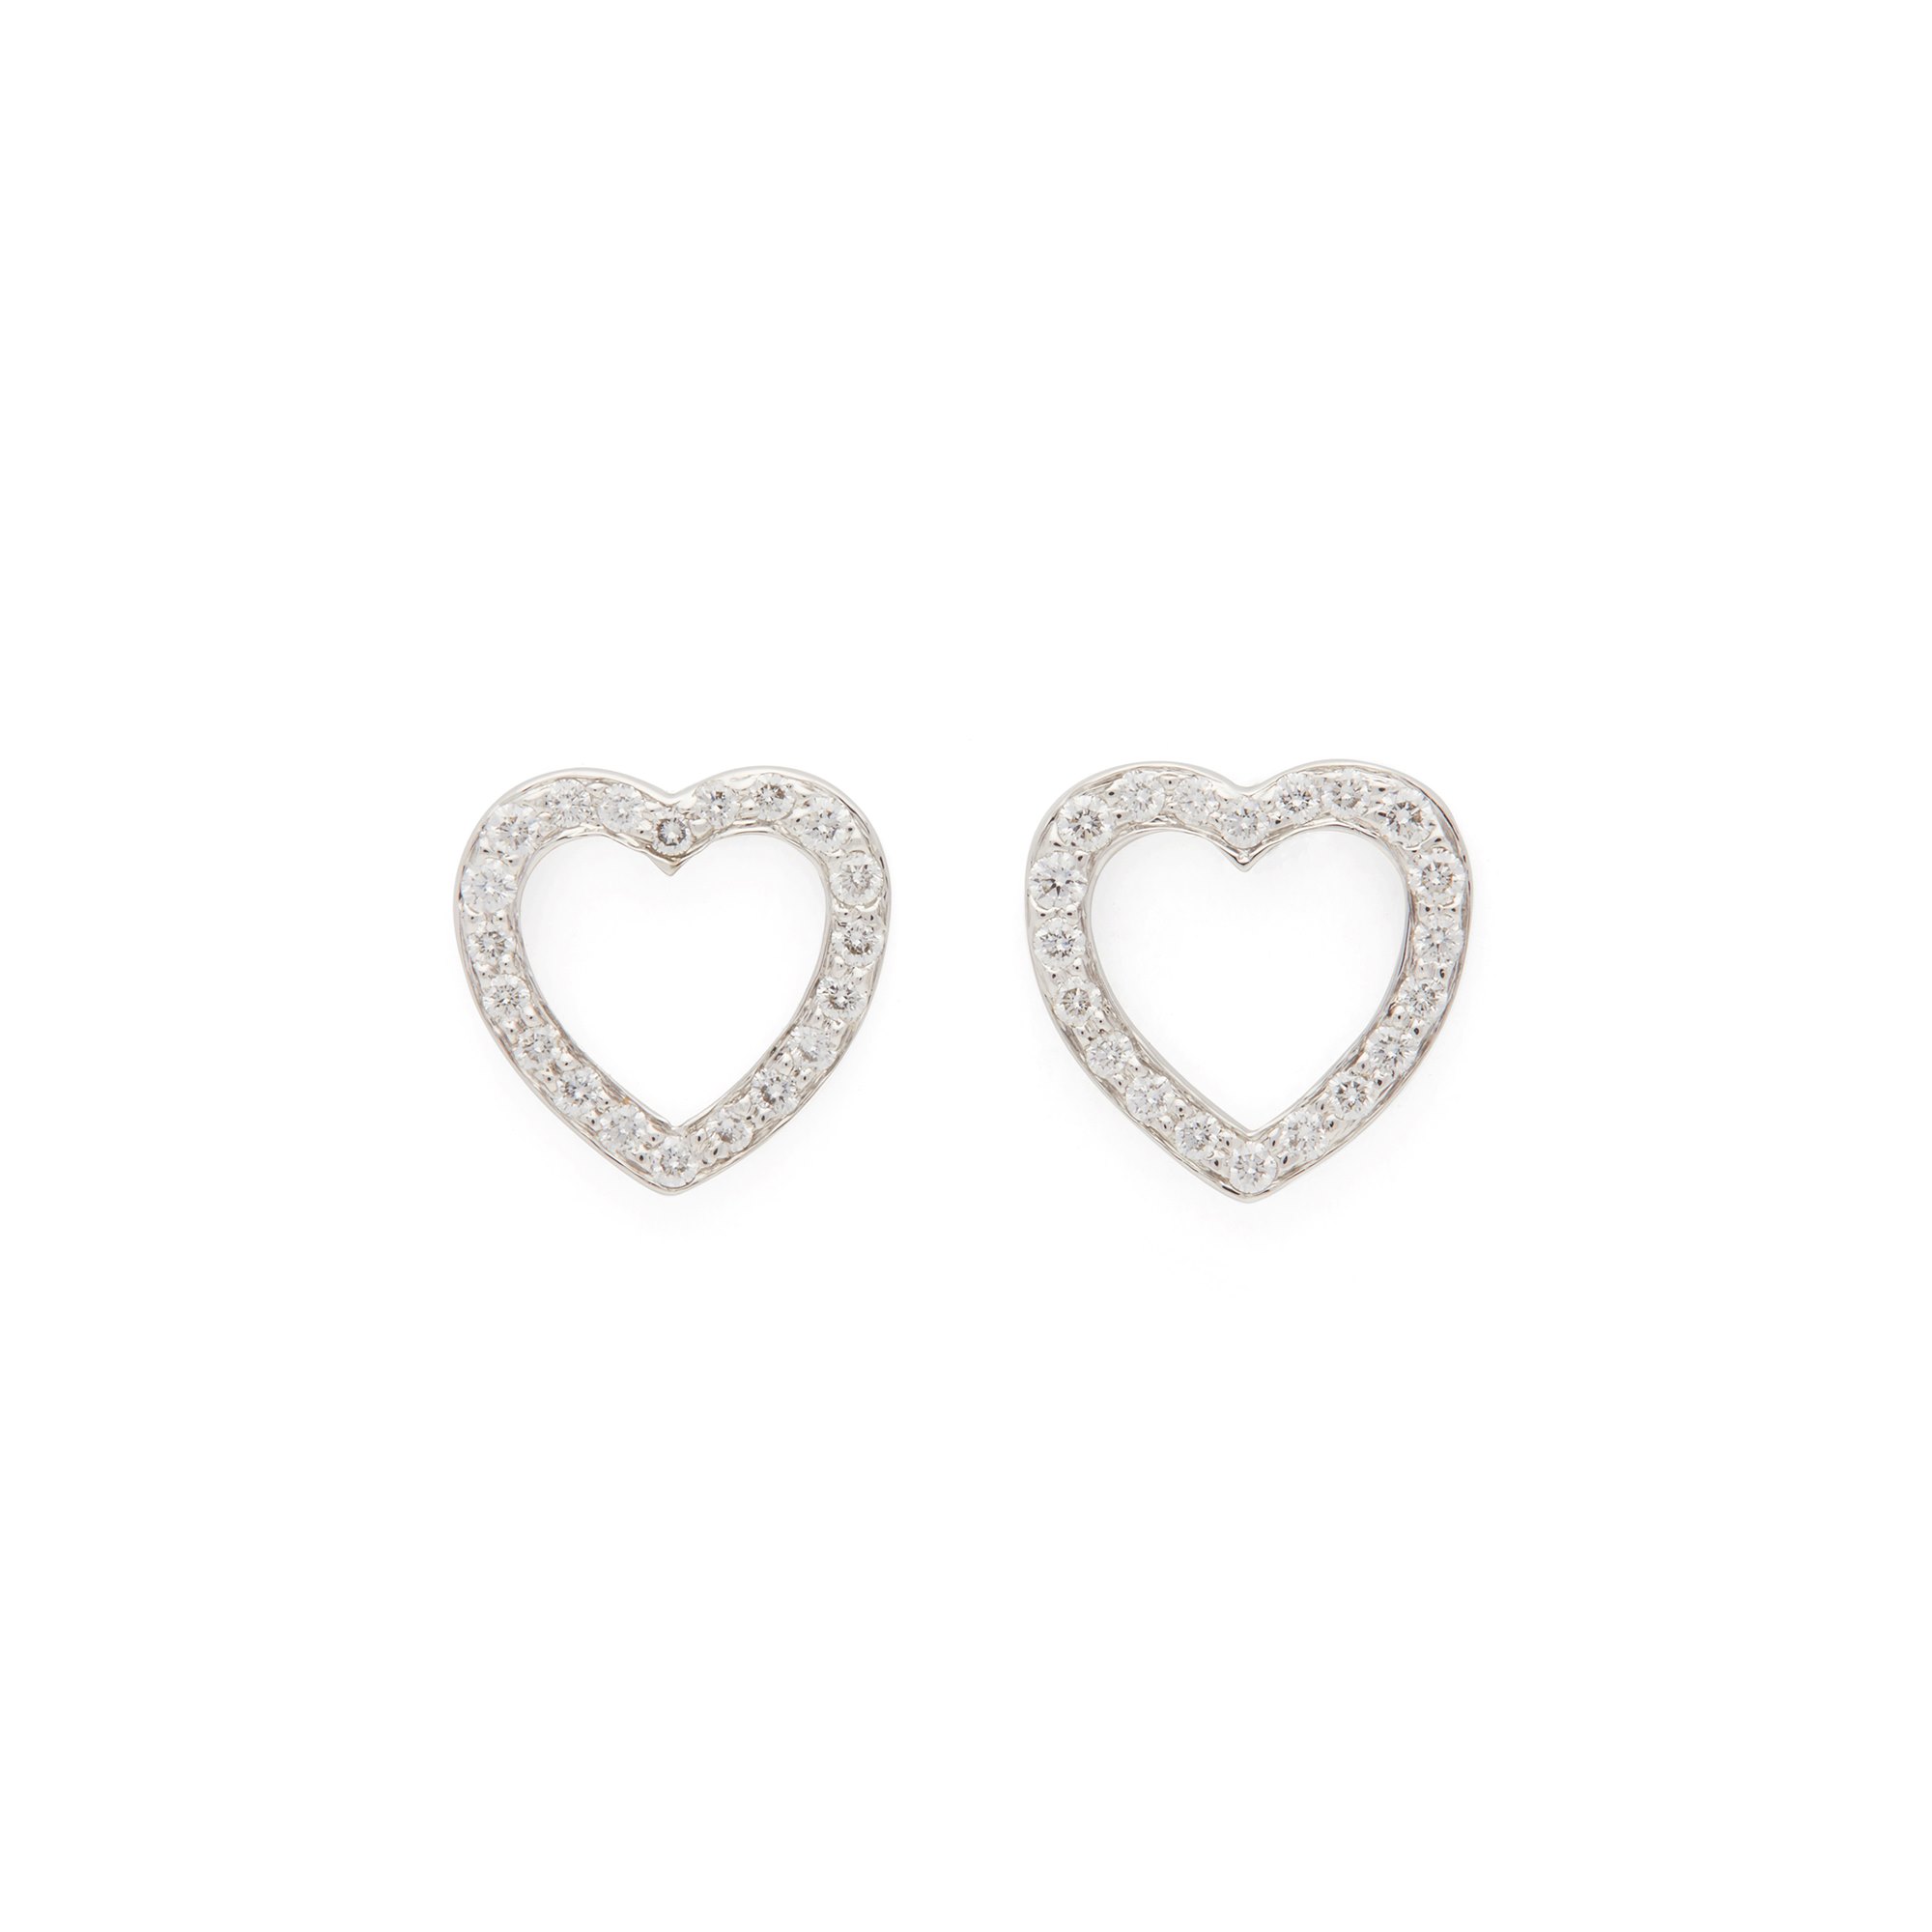 Tiffany & Co. Platinum Diamond Heart Earrings